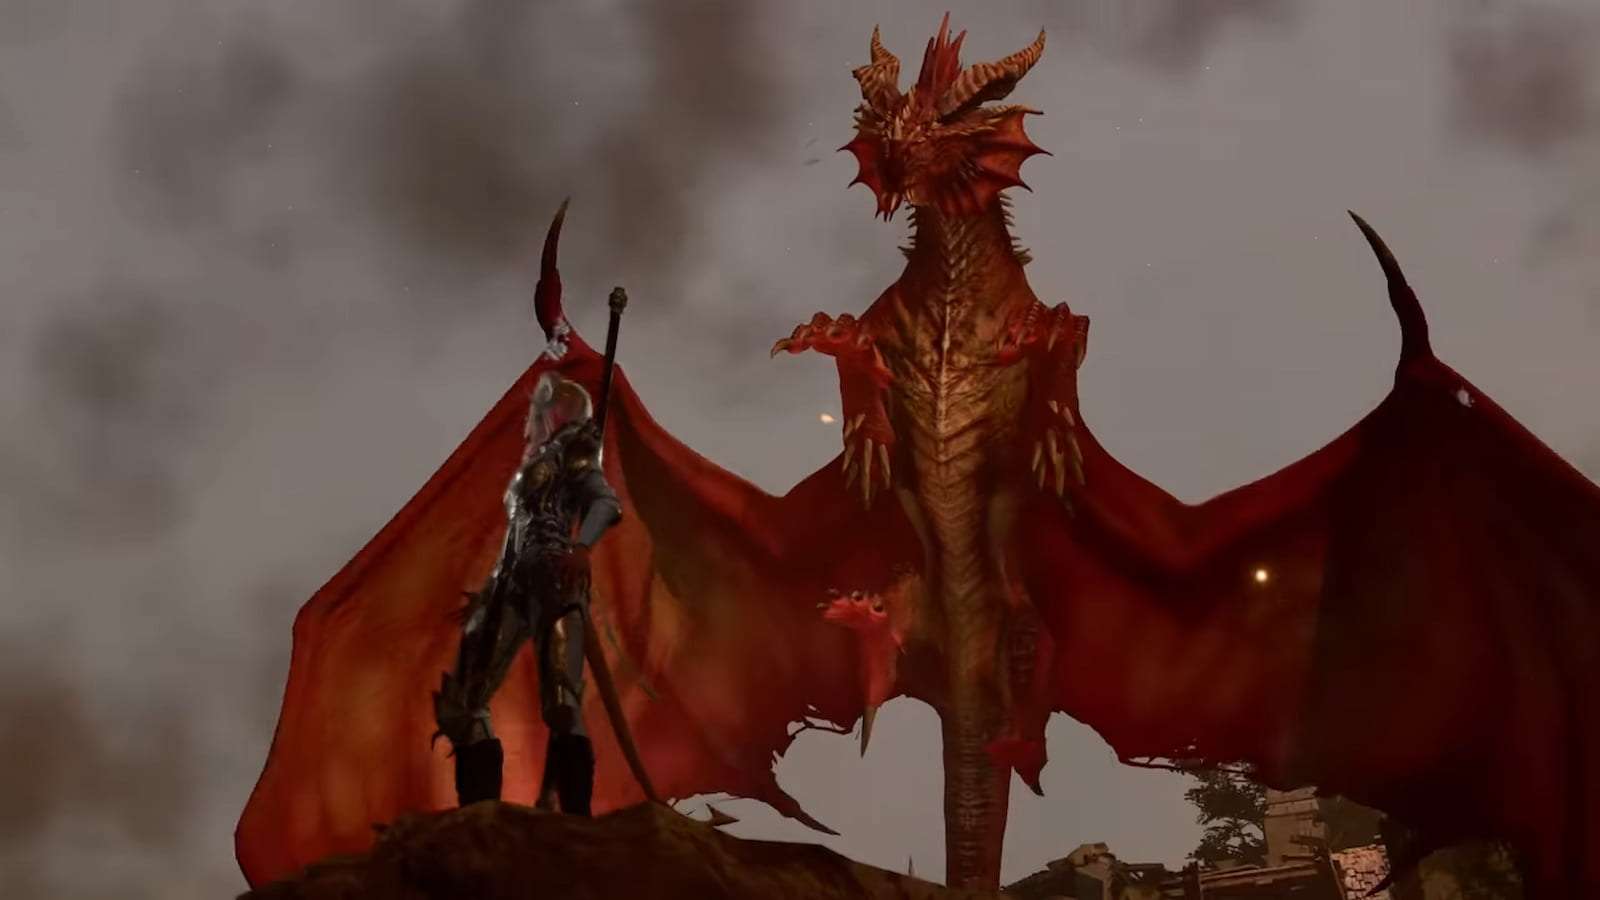 A Red Dragon overheard in Baldur's Gate 3